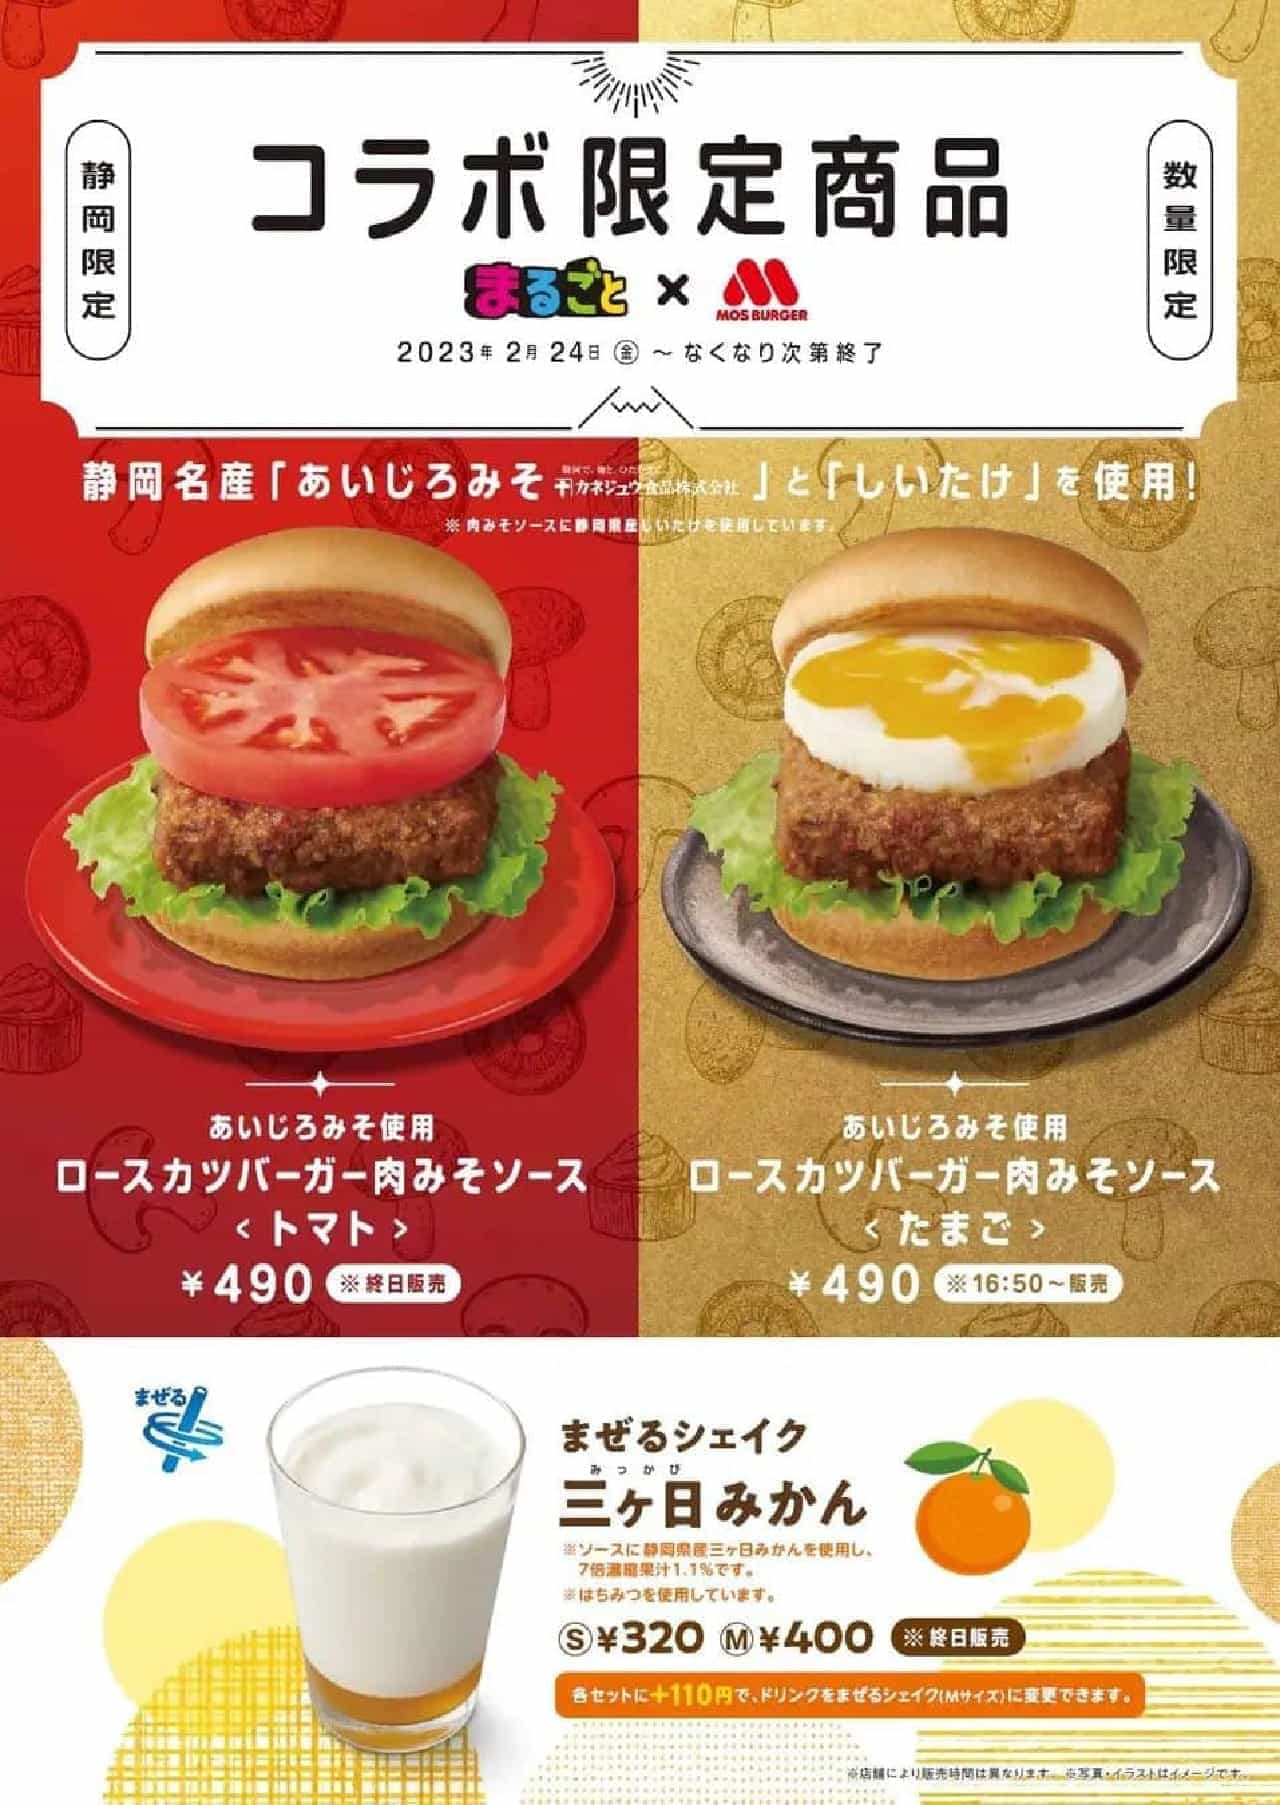 Mos Burger "Roast pork cutlet burger using Aijiro Miso with meat miso sauce [Tomato]".